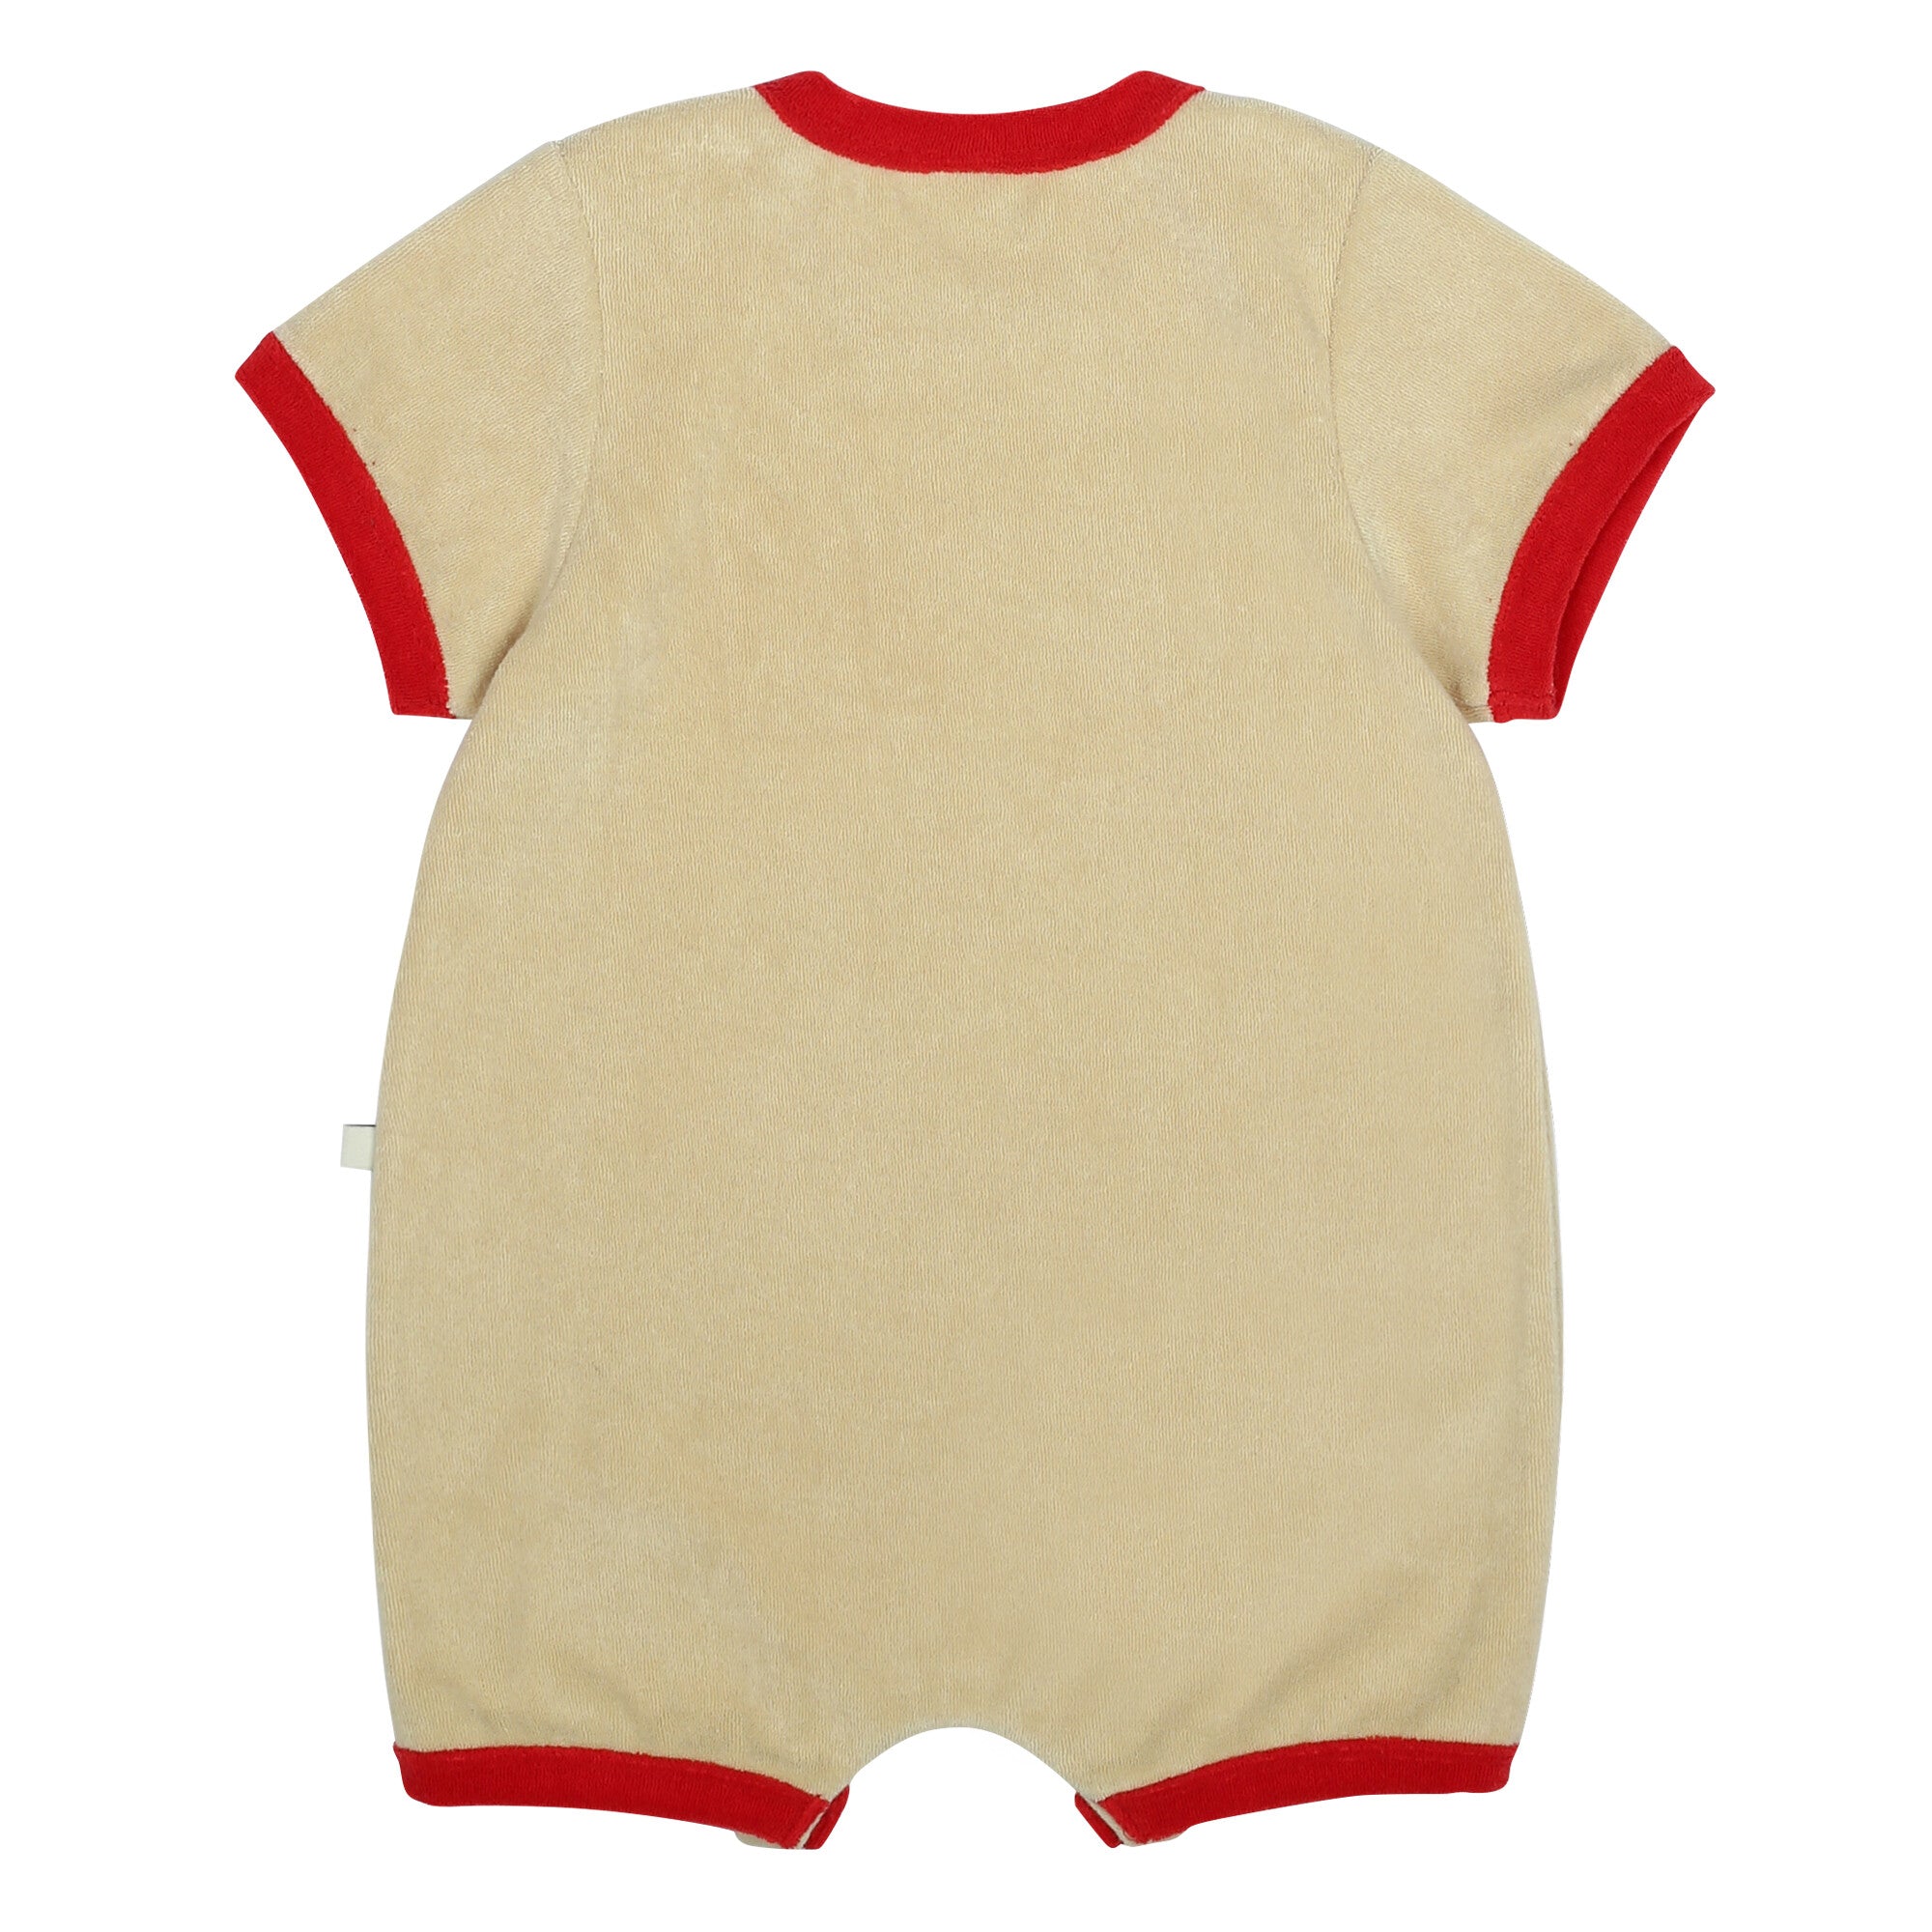 Baby Boys & Girls Beige Printed Cotton Babysuit